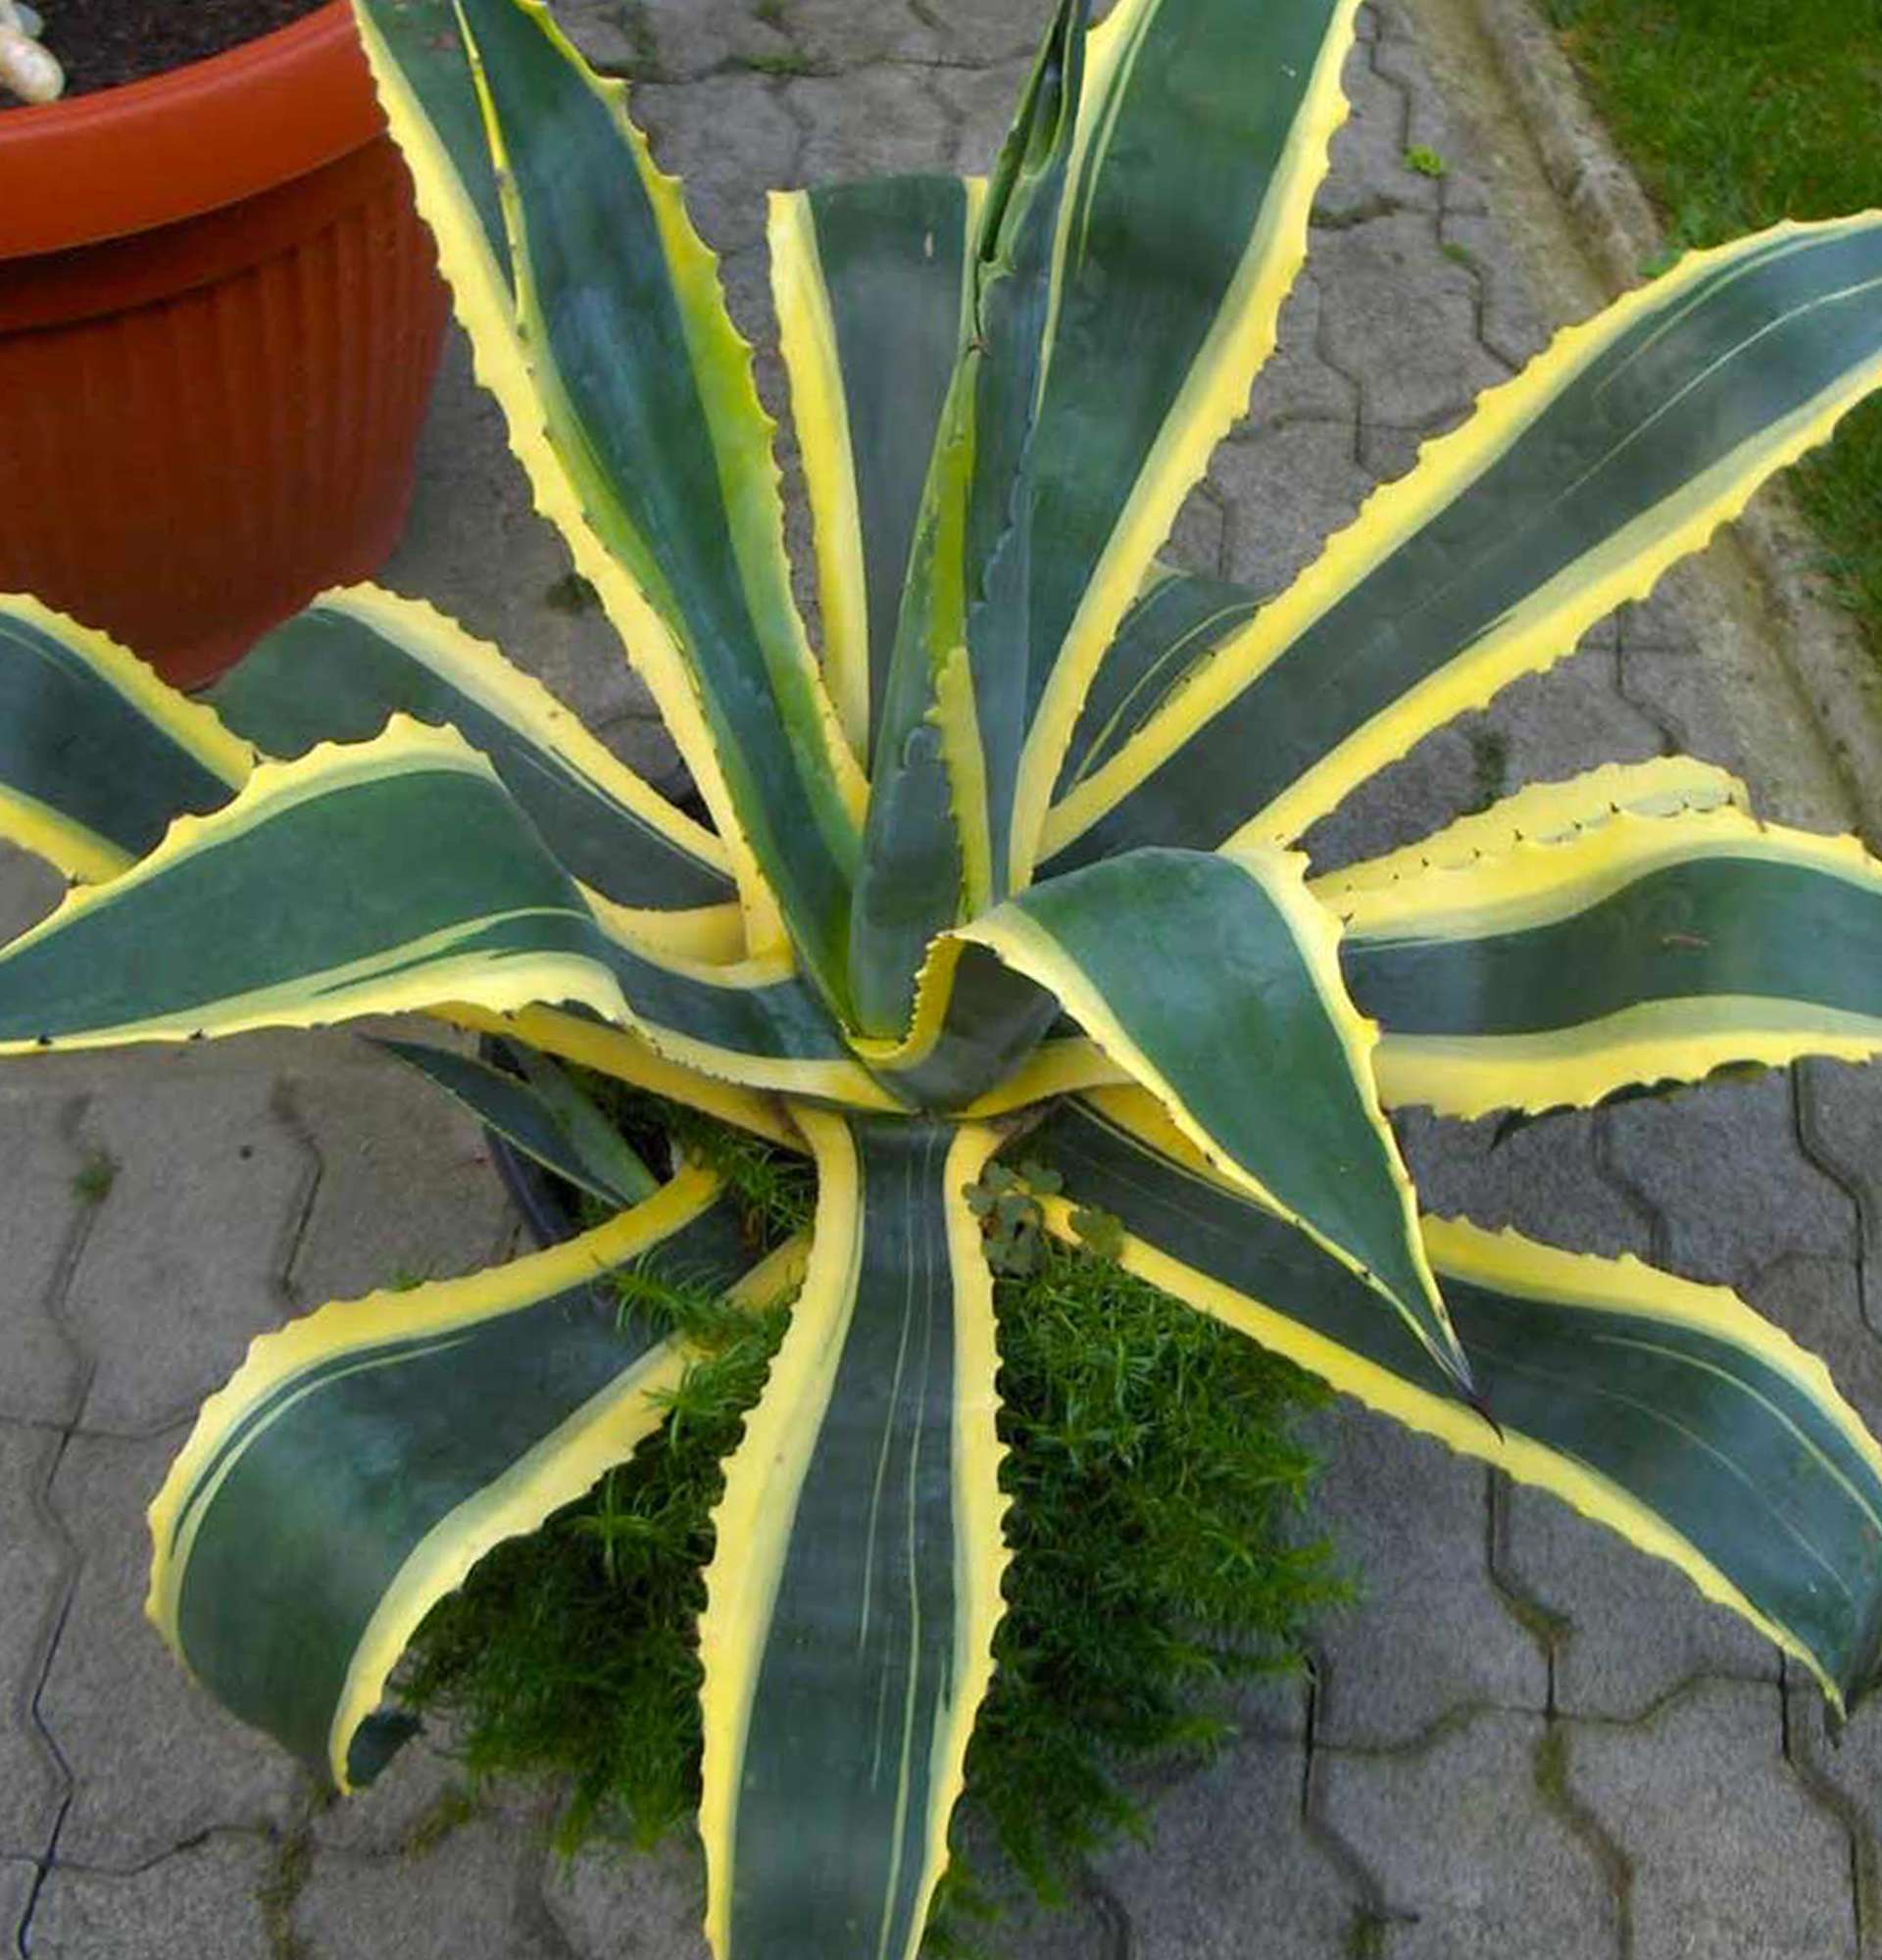  вазон агава фото - суккулент с желто-зелеными листьями